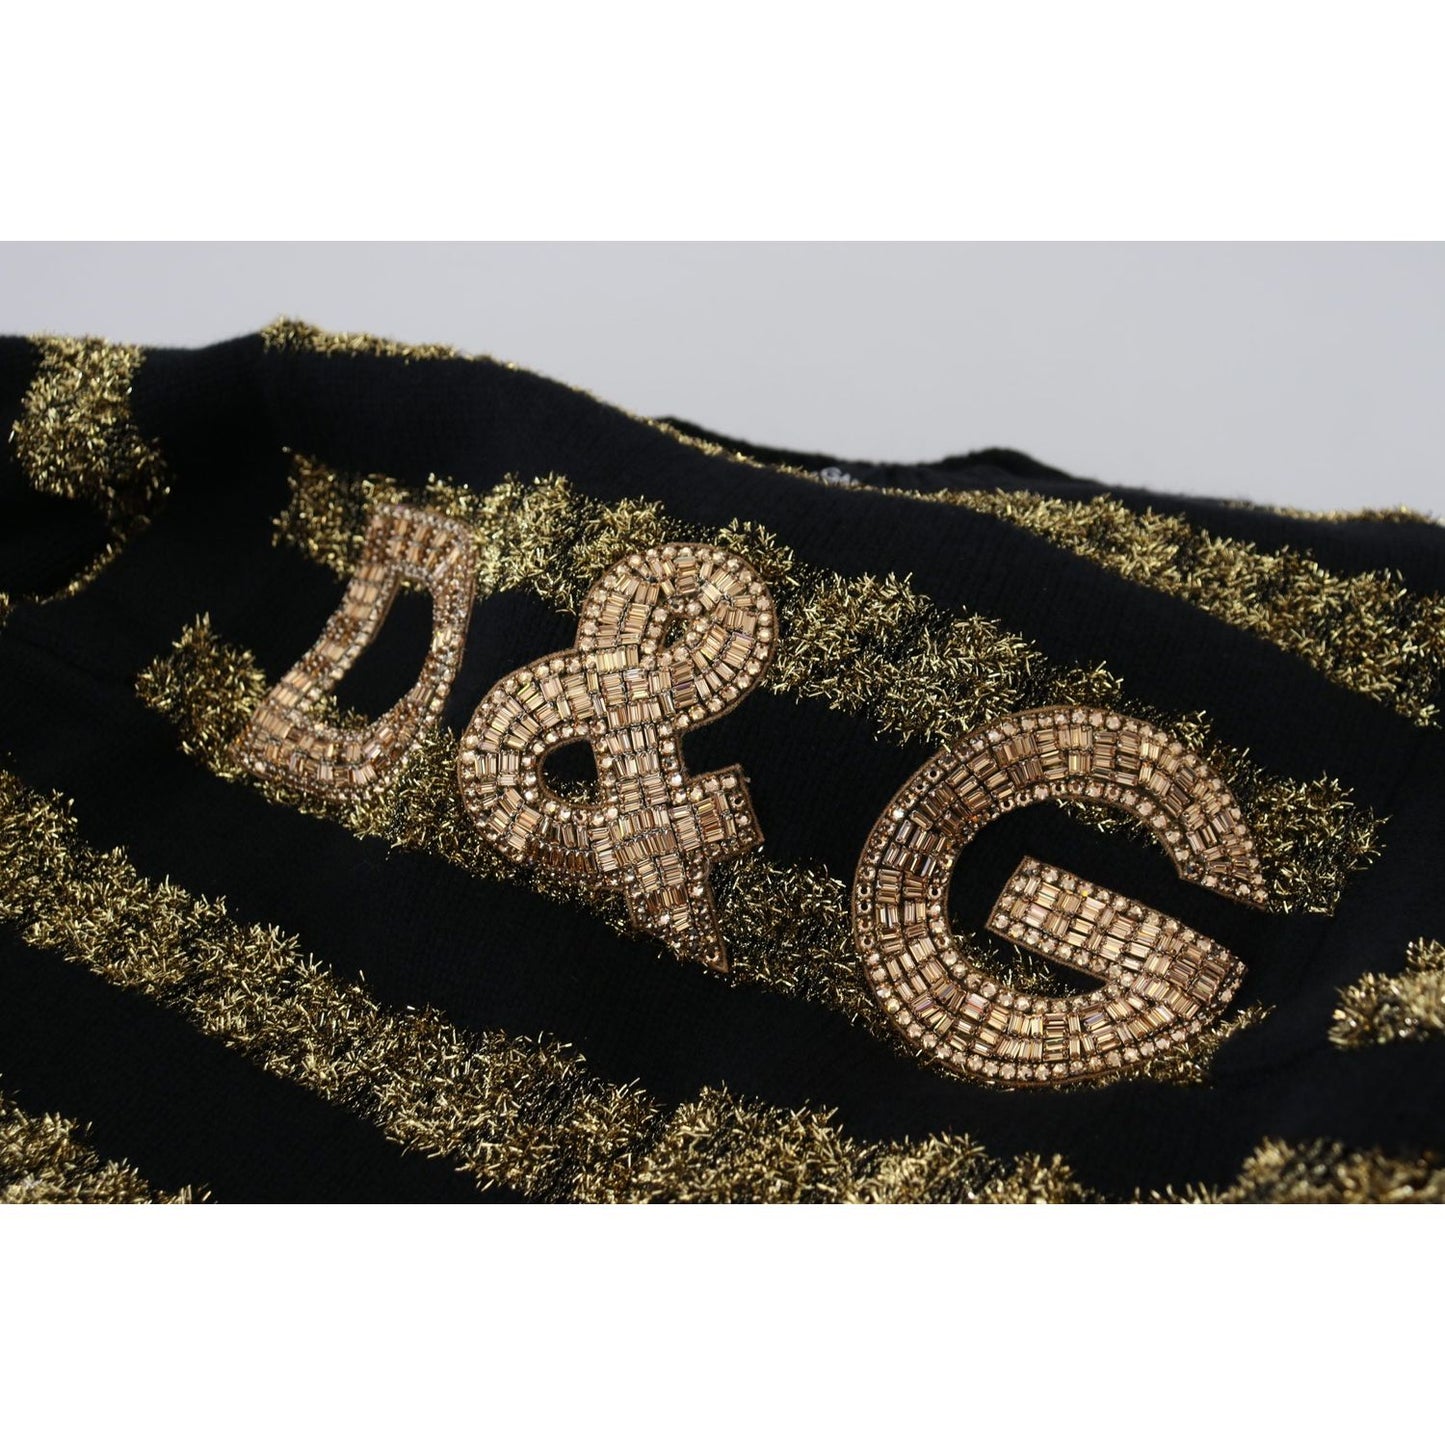 Dolce & GabbanaElegant Black and Gold Crystal SweaterMcRichard Designer Brands£1039.00